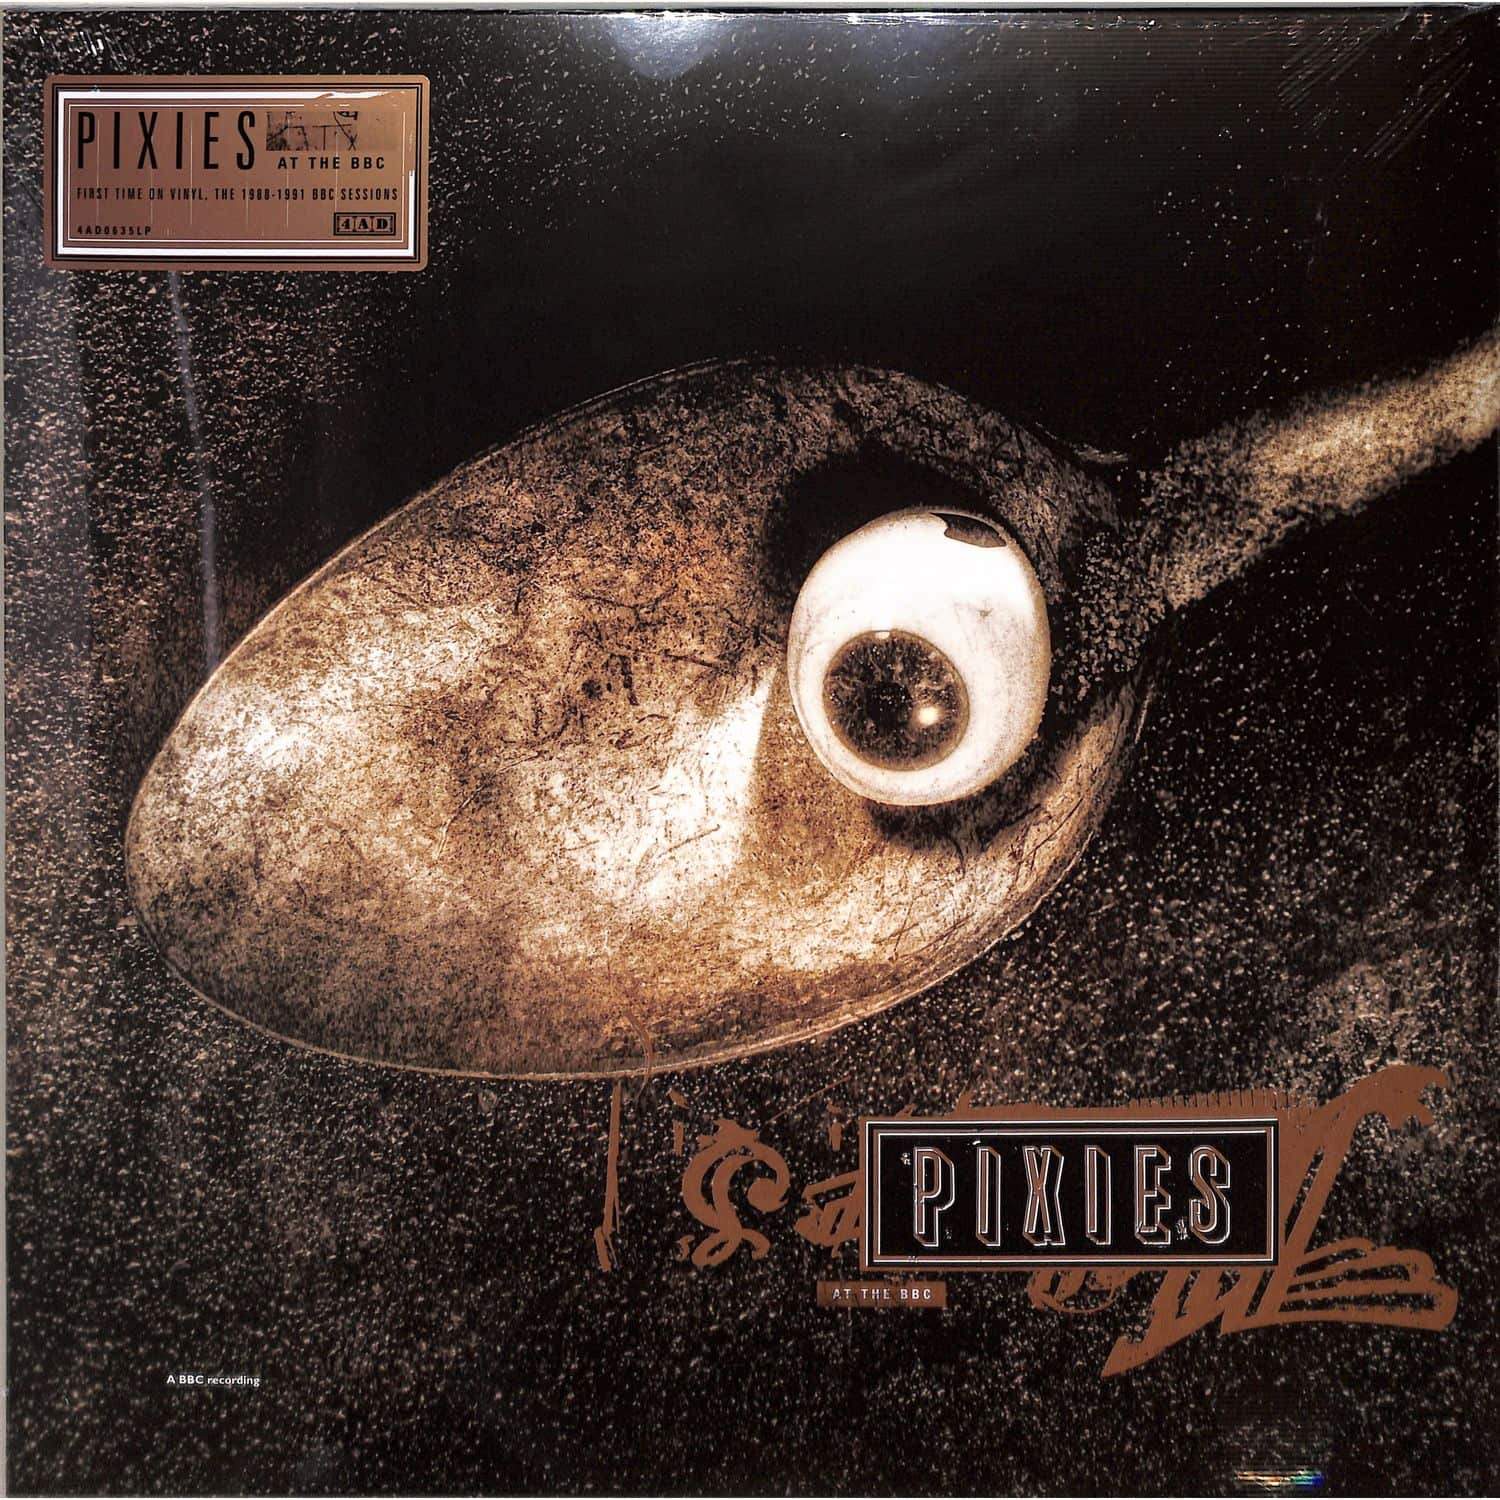 Pixies - LIVE AT BBC 